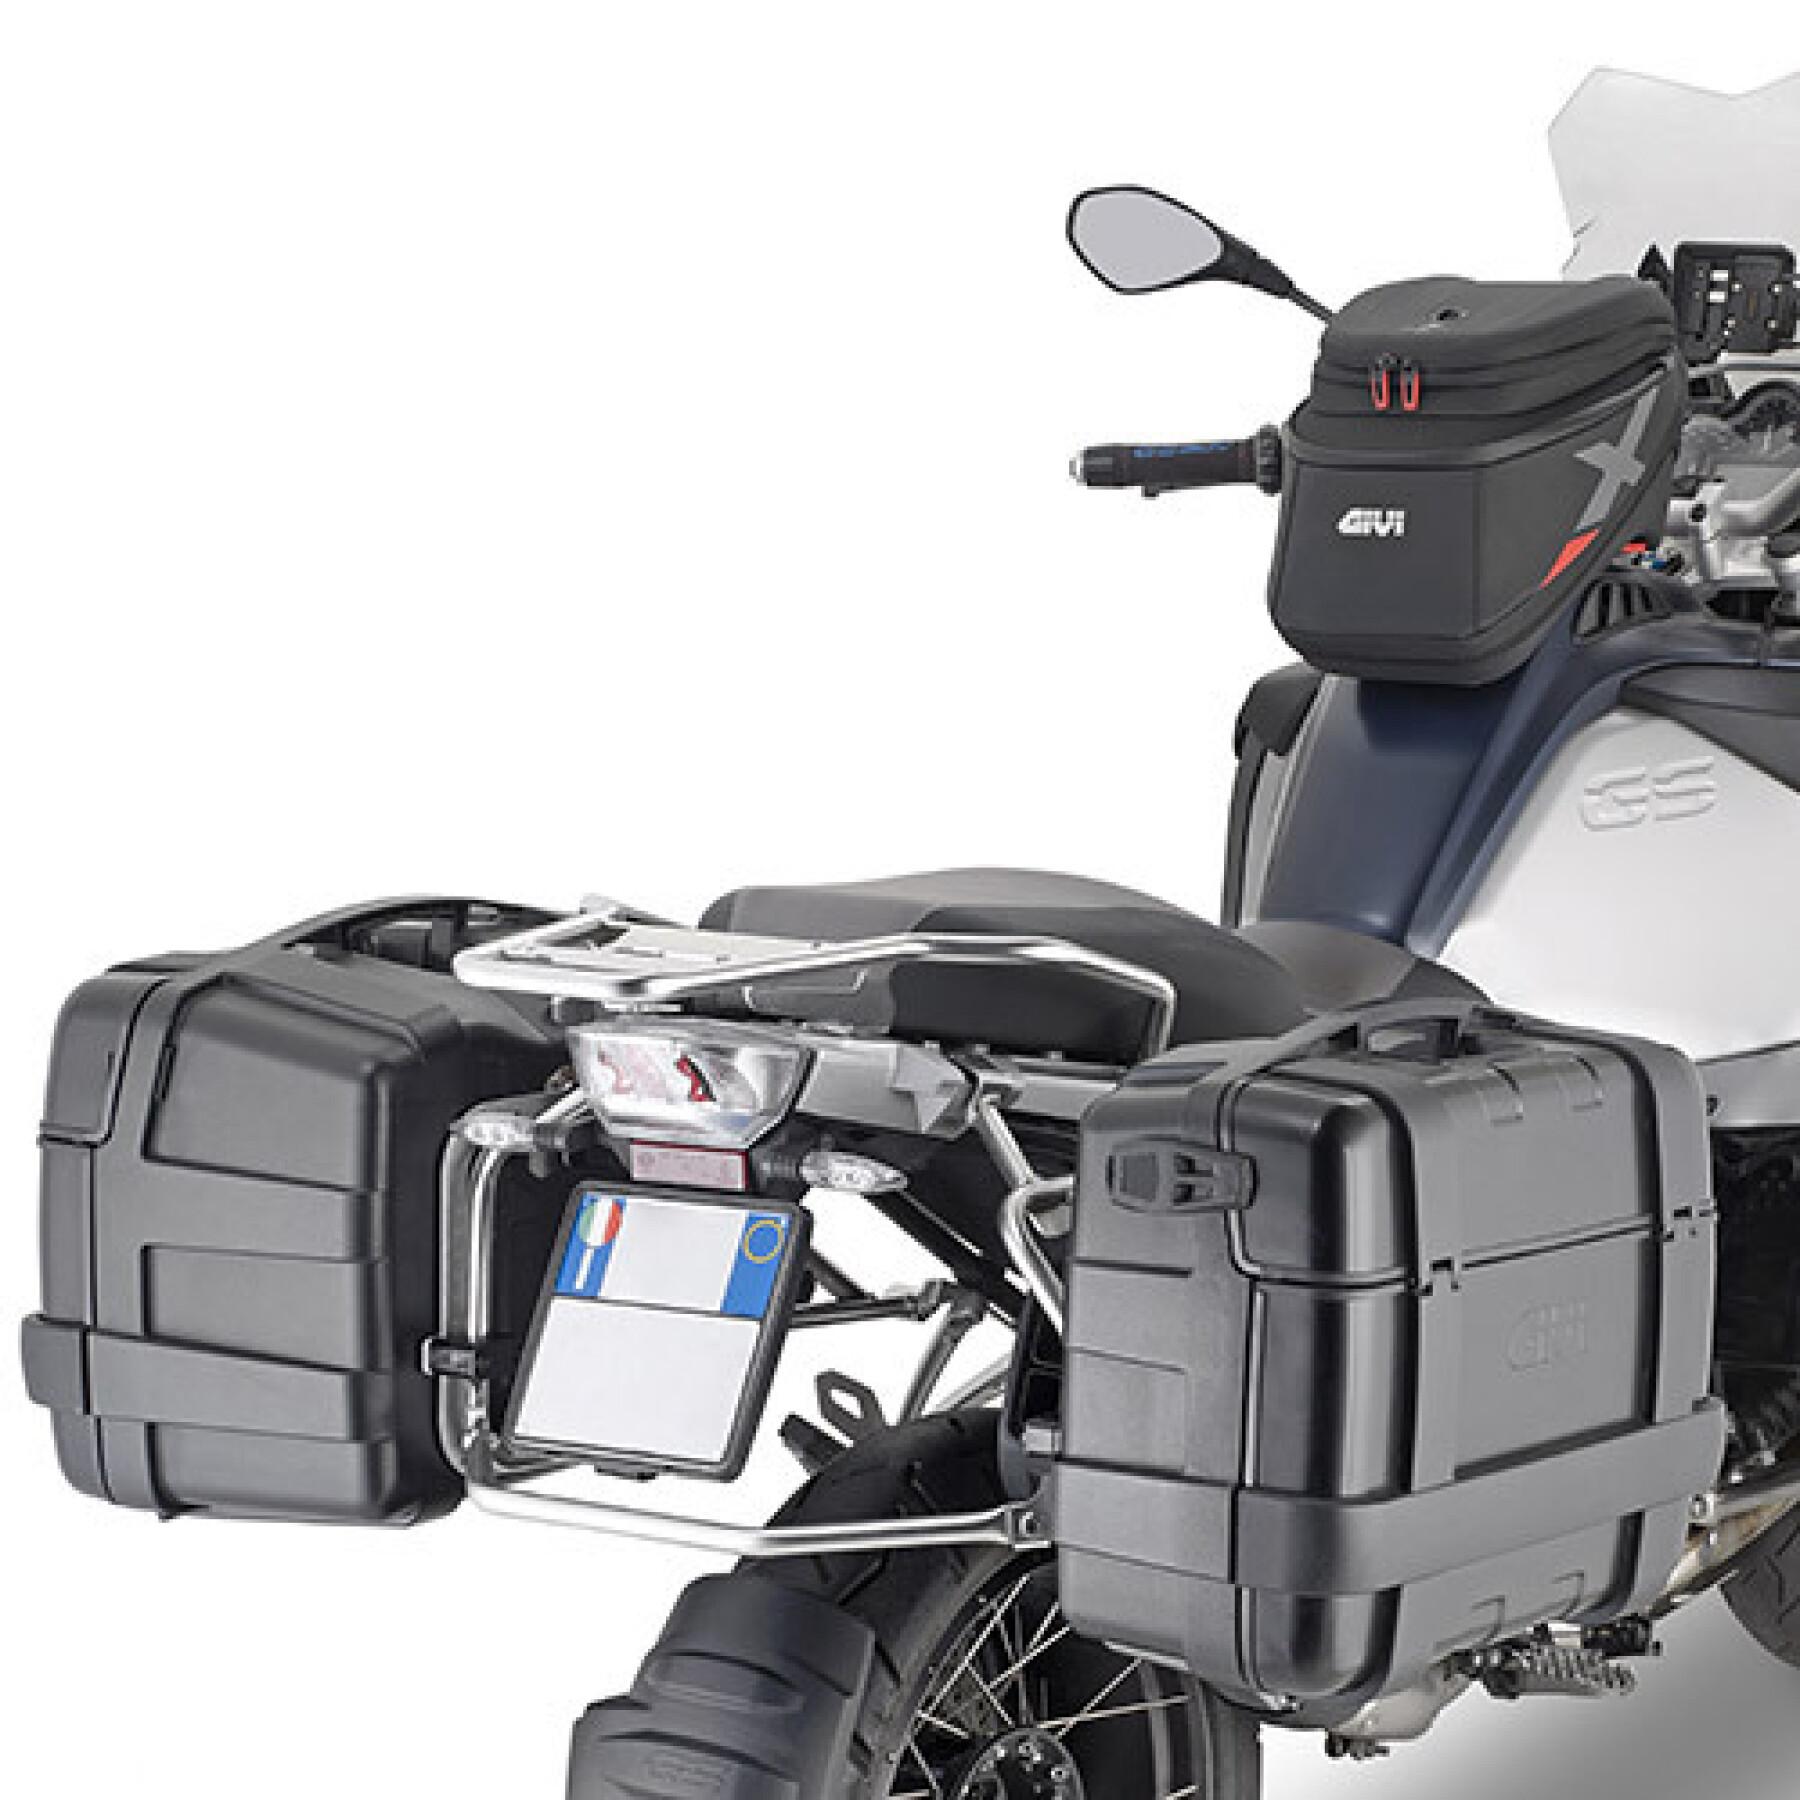 Support valises latérales moto Givi BMW R1250ADV (19-21) (PL5112)